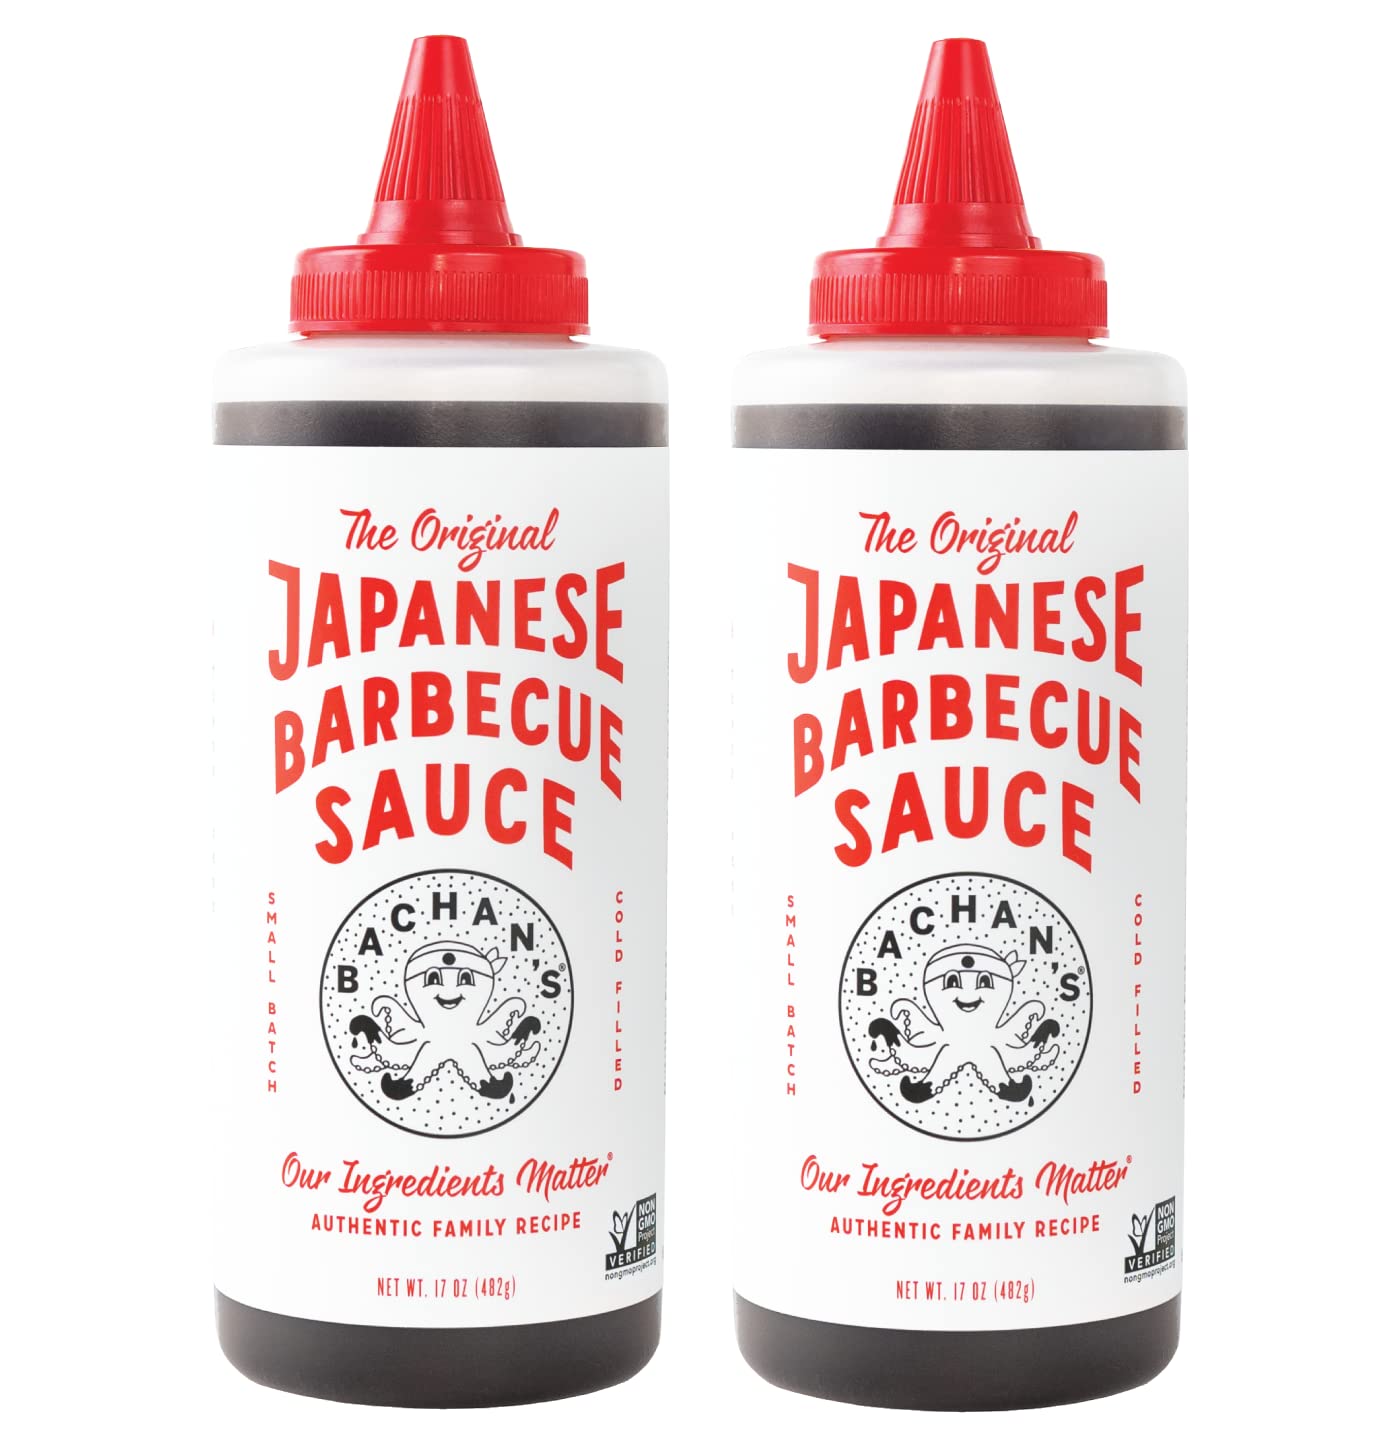 bachan japanese bbq sauce